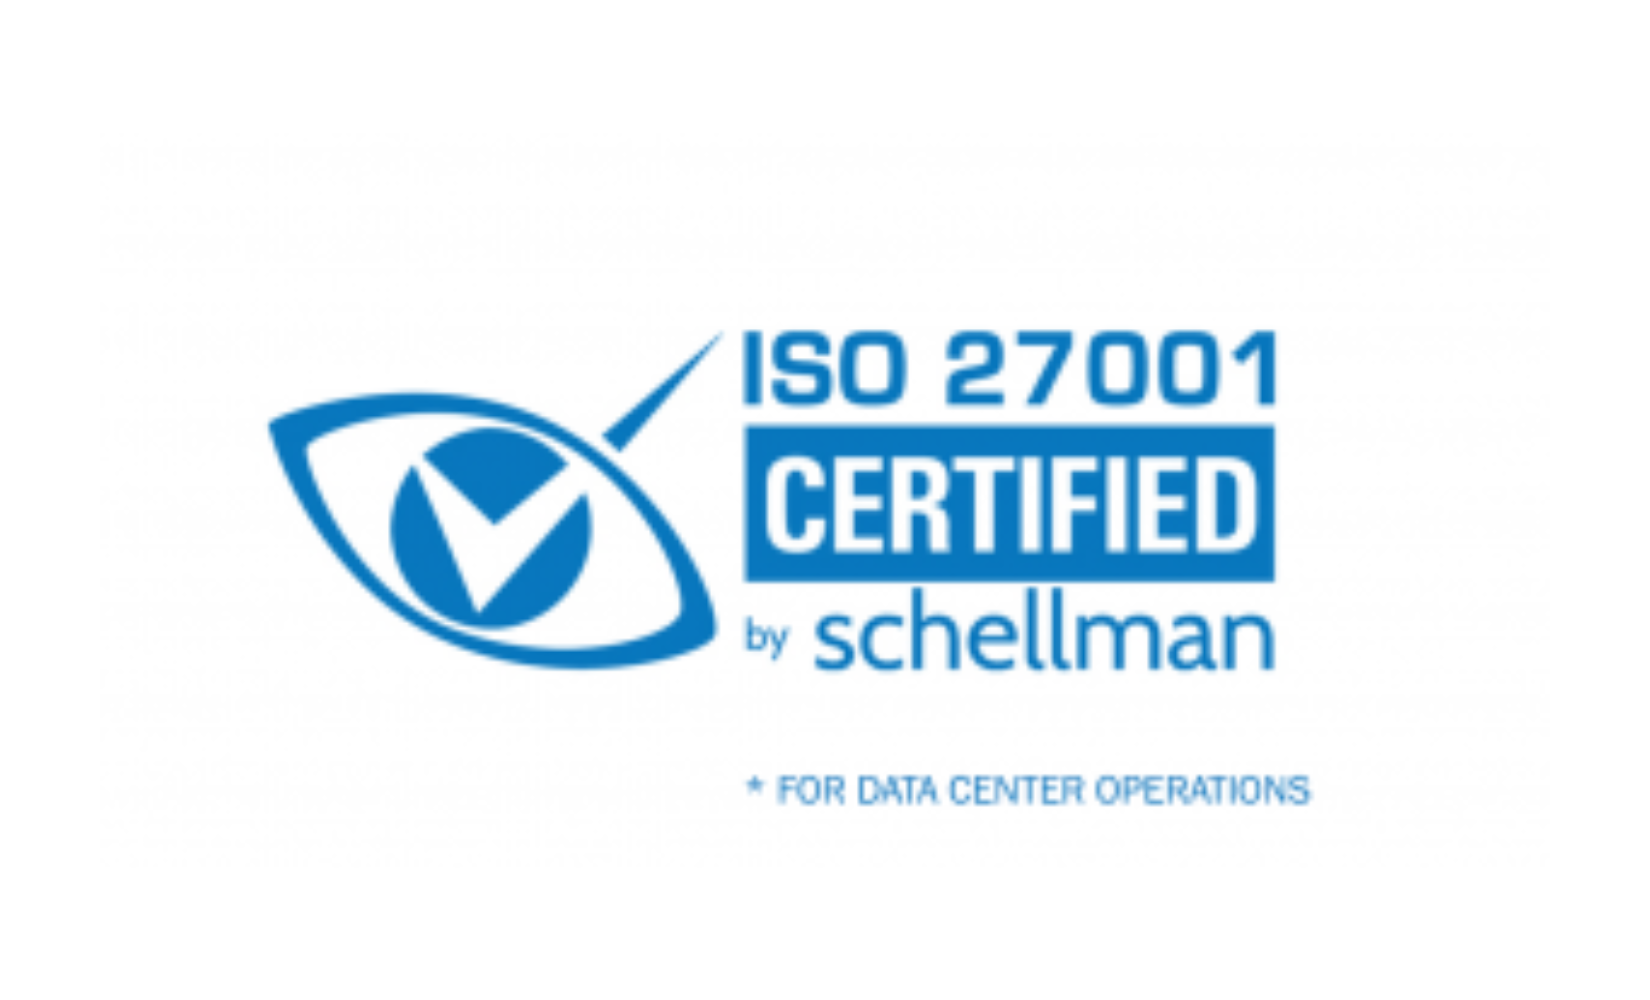 iso 27001 certification logo